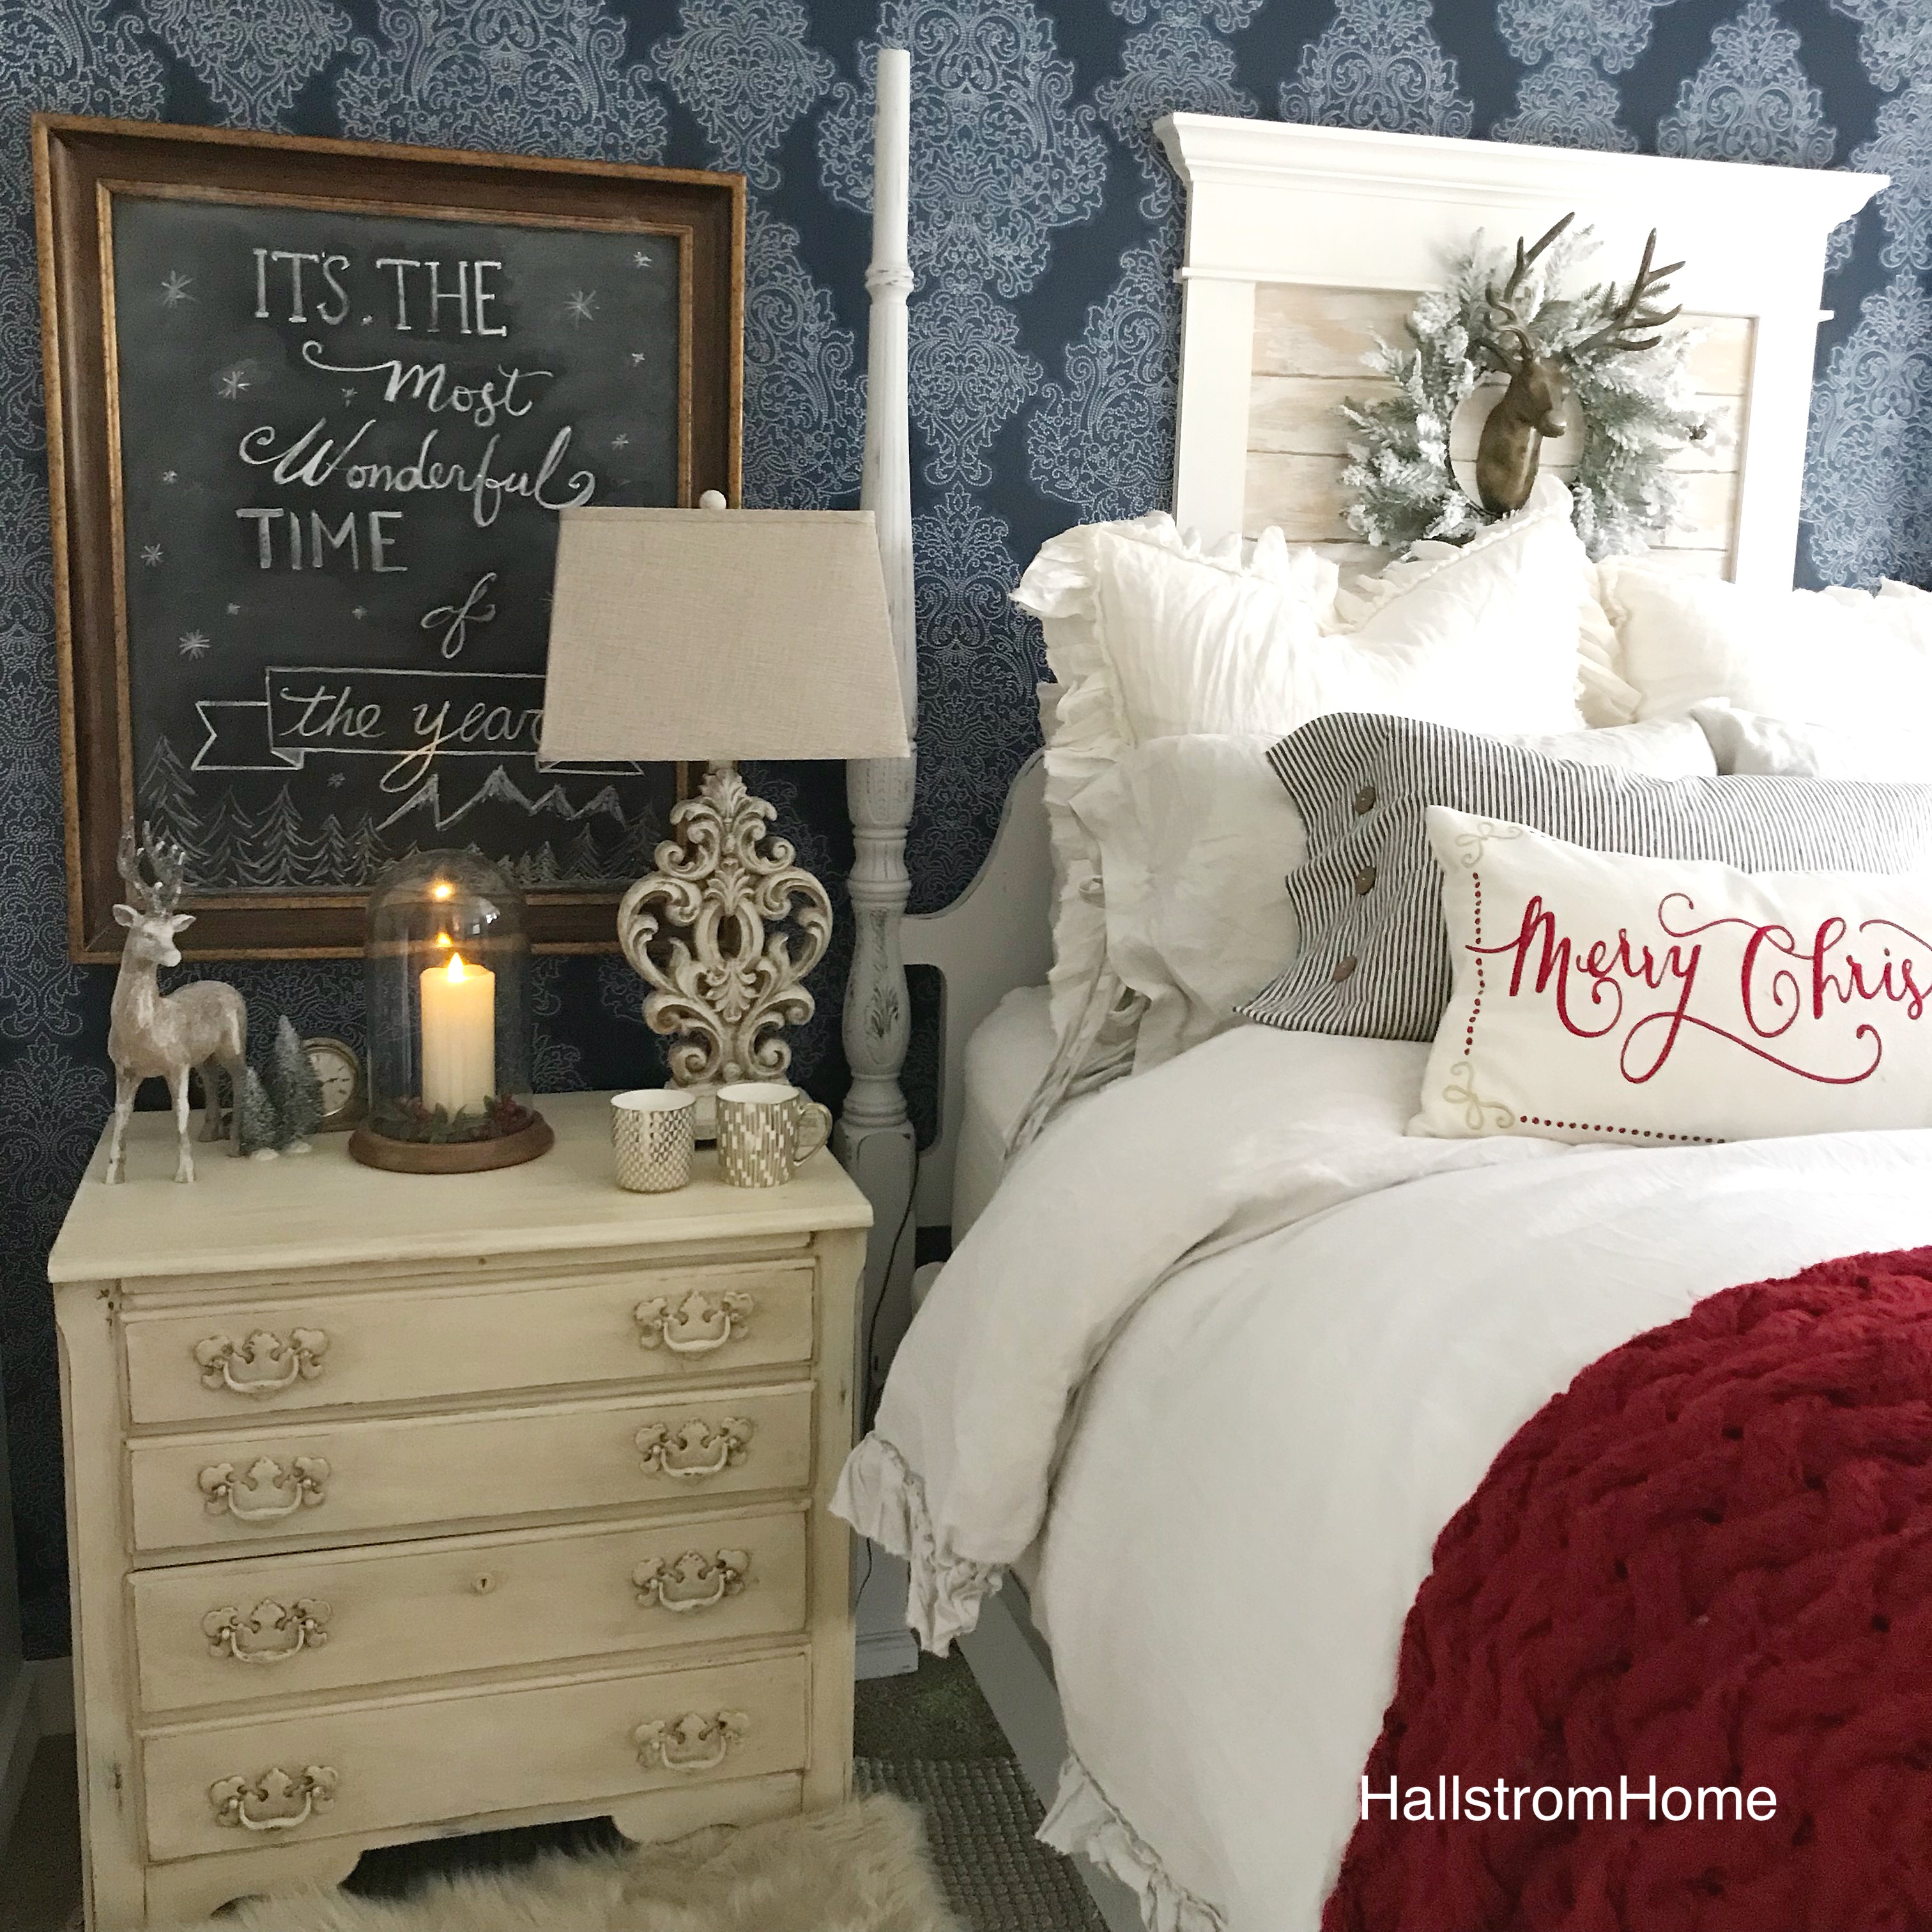 Cozy Christmas Farmhouse Bedroom Tour